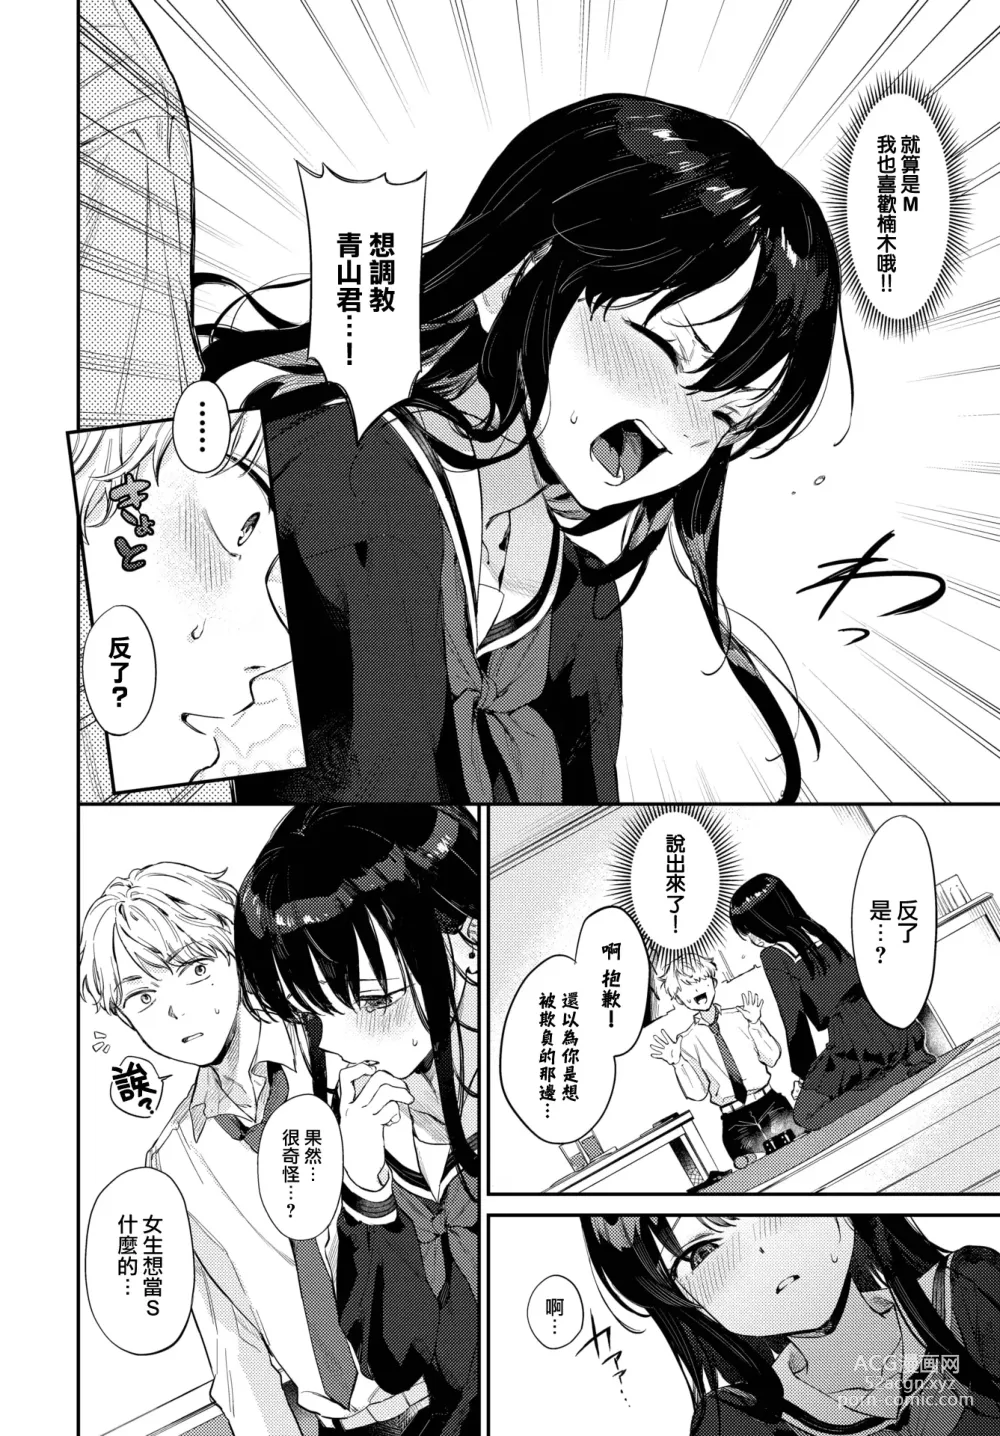 Page 7 of manga Muttsuri Bloom